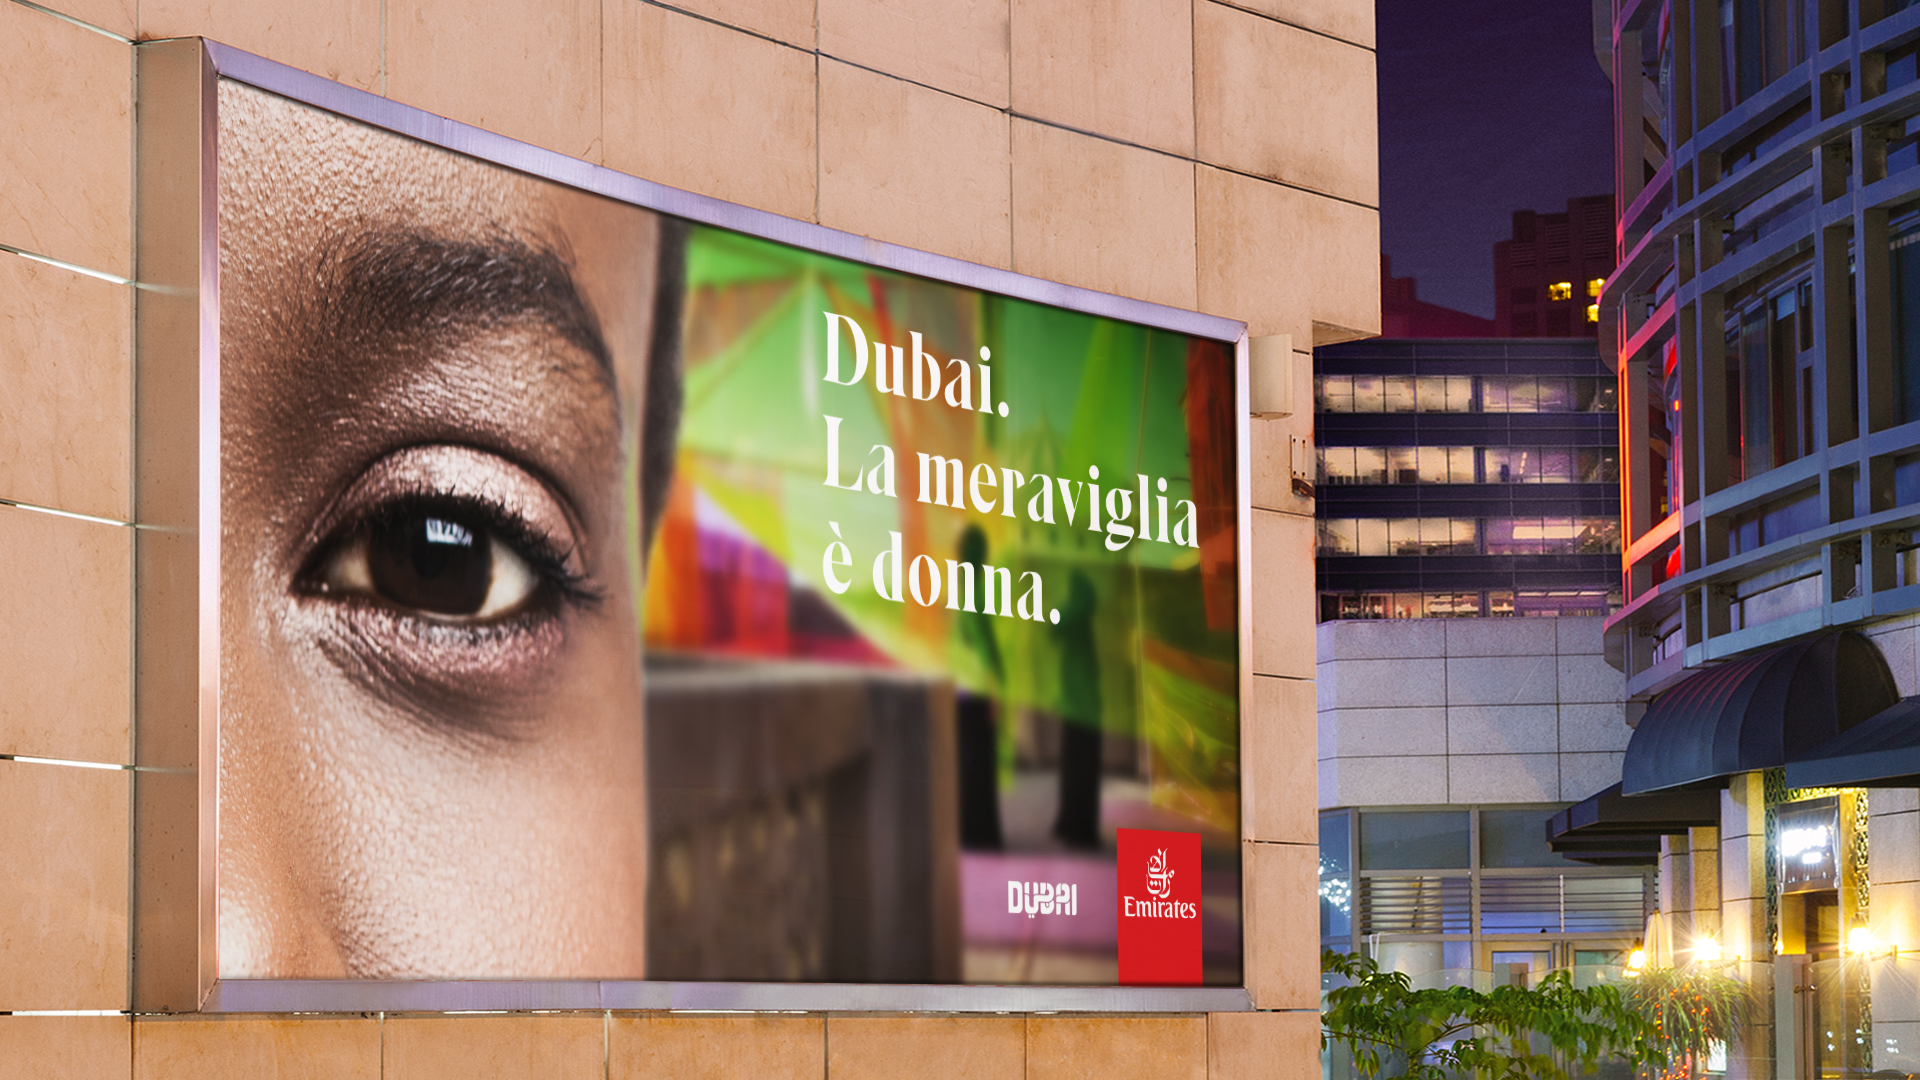 Emirates Dubai – Advertising Billboard on Street